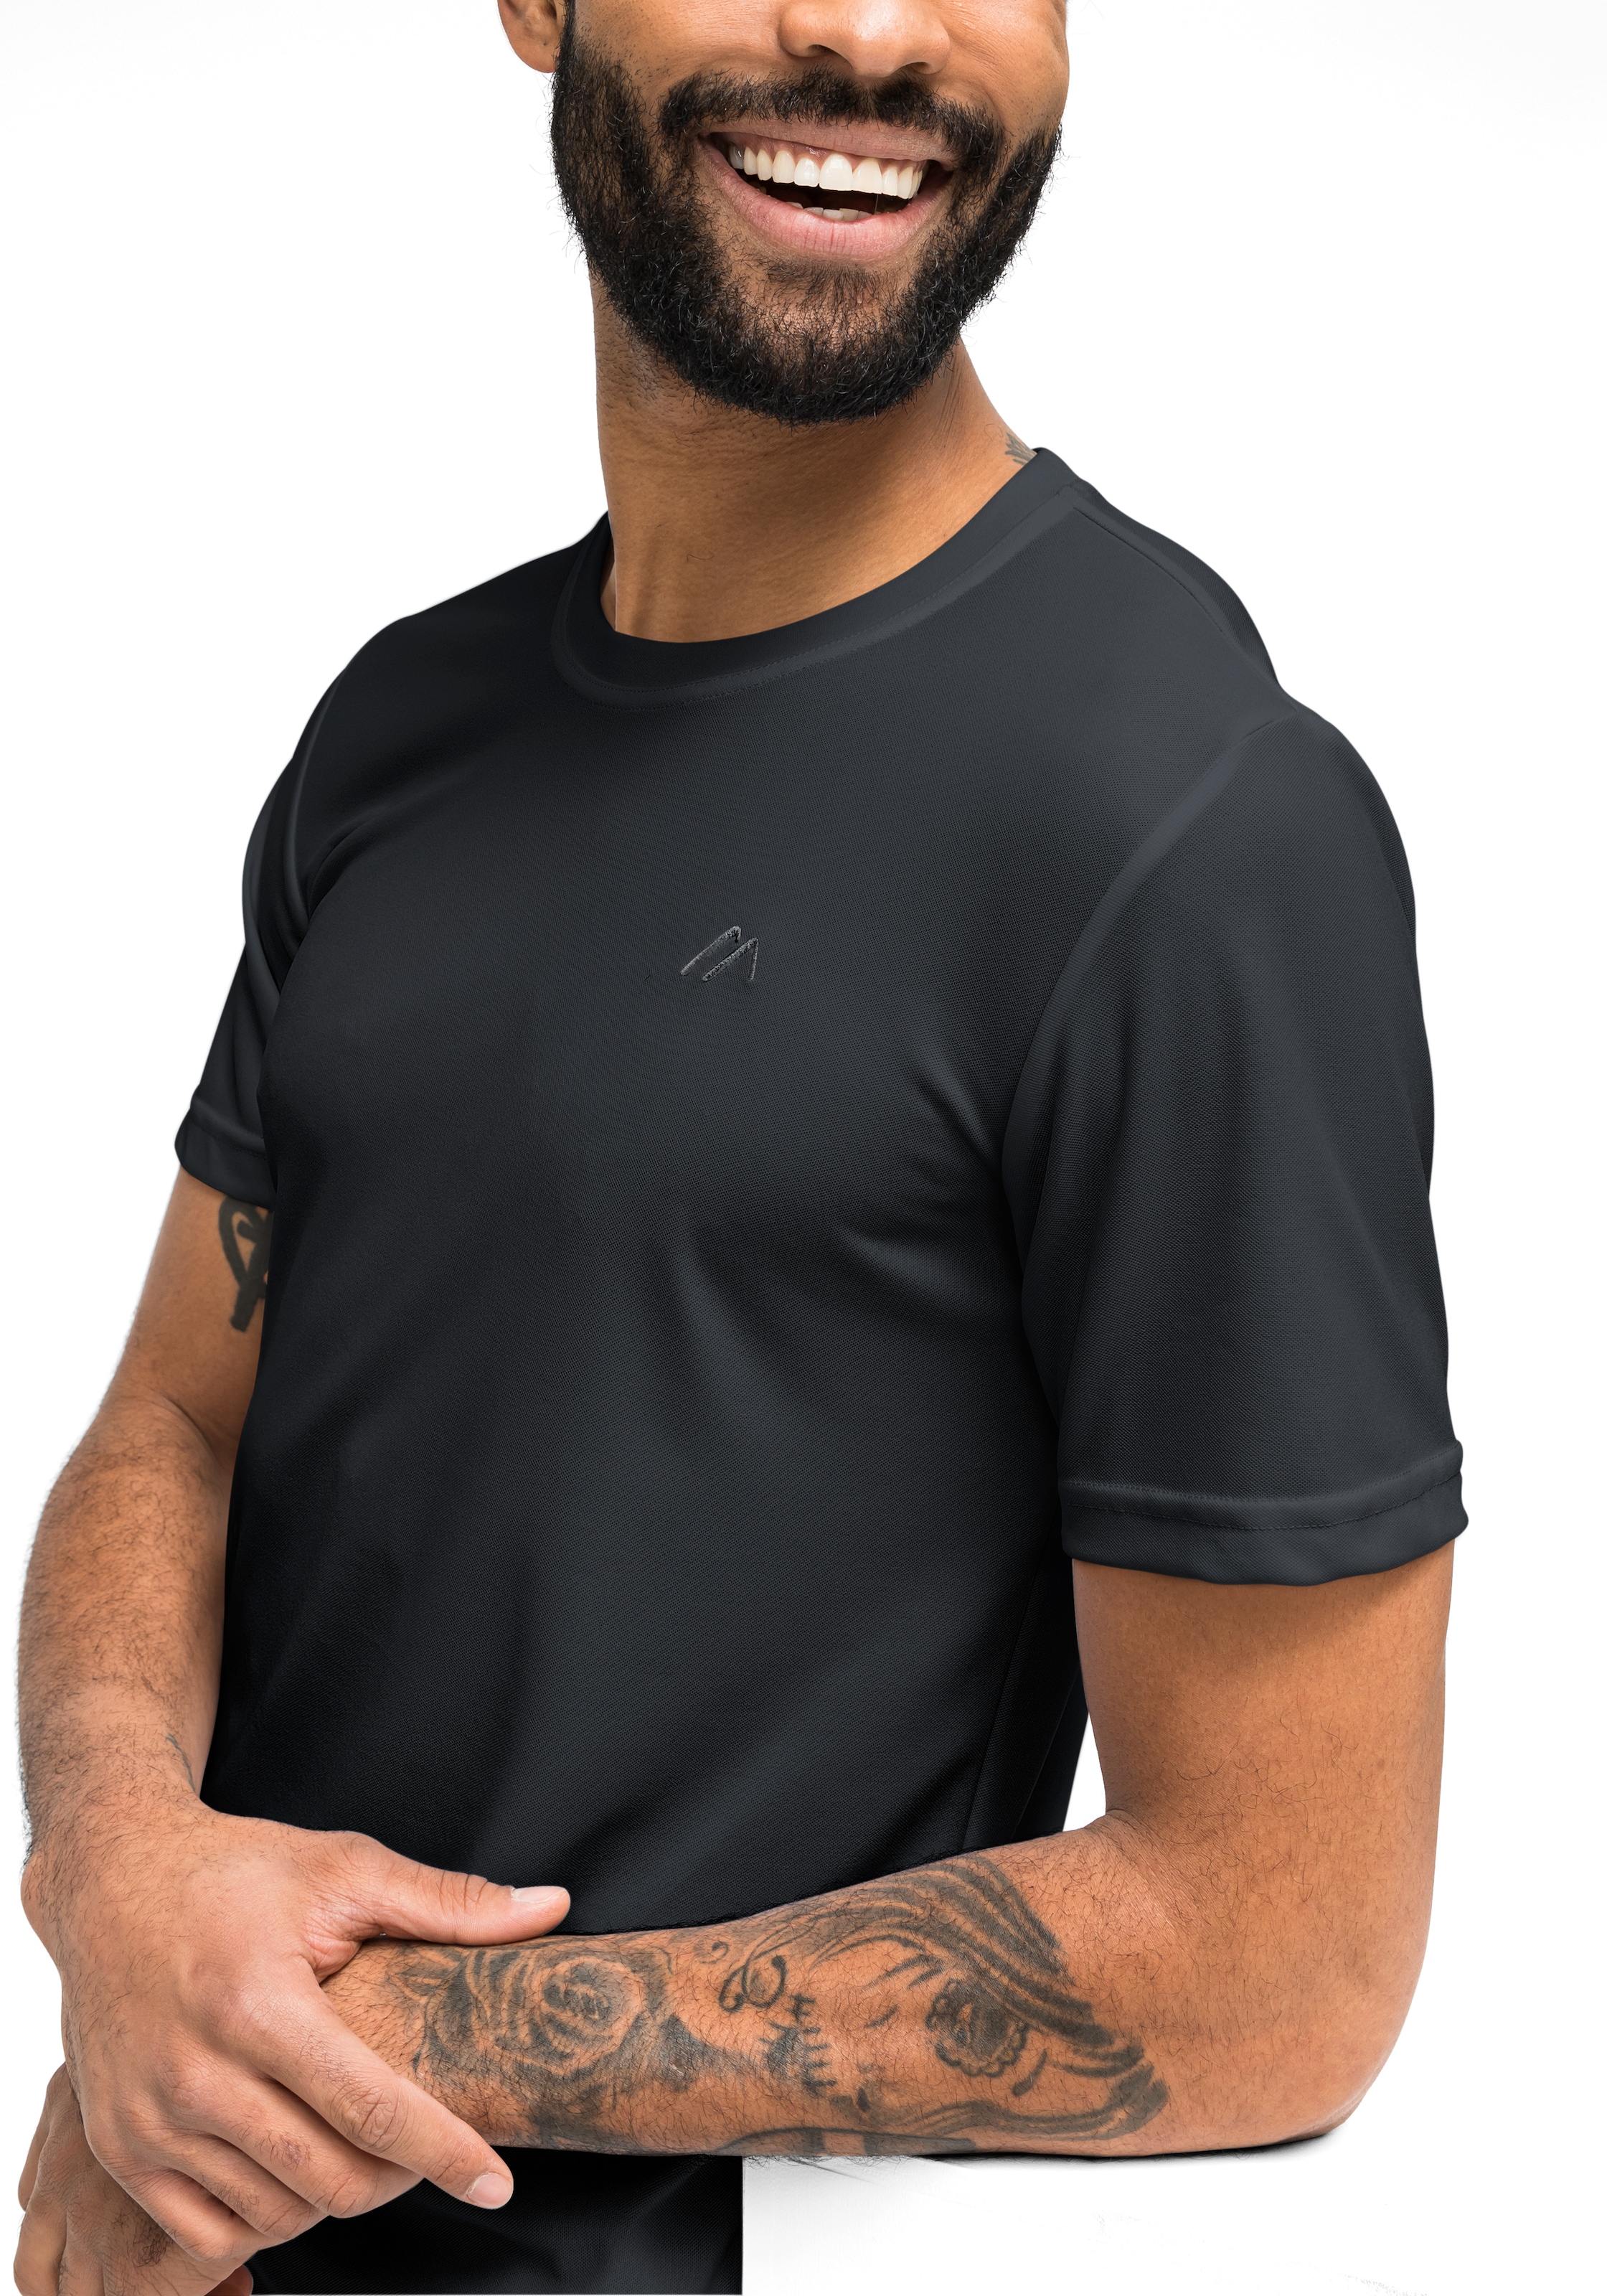 Maier Sports Funktionsshirt »Walter«, Herren T-Shirt, rundhals pique Outdoorshirt, schnelltrocknend